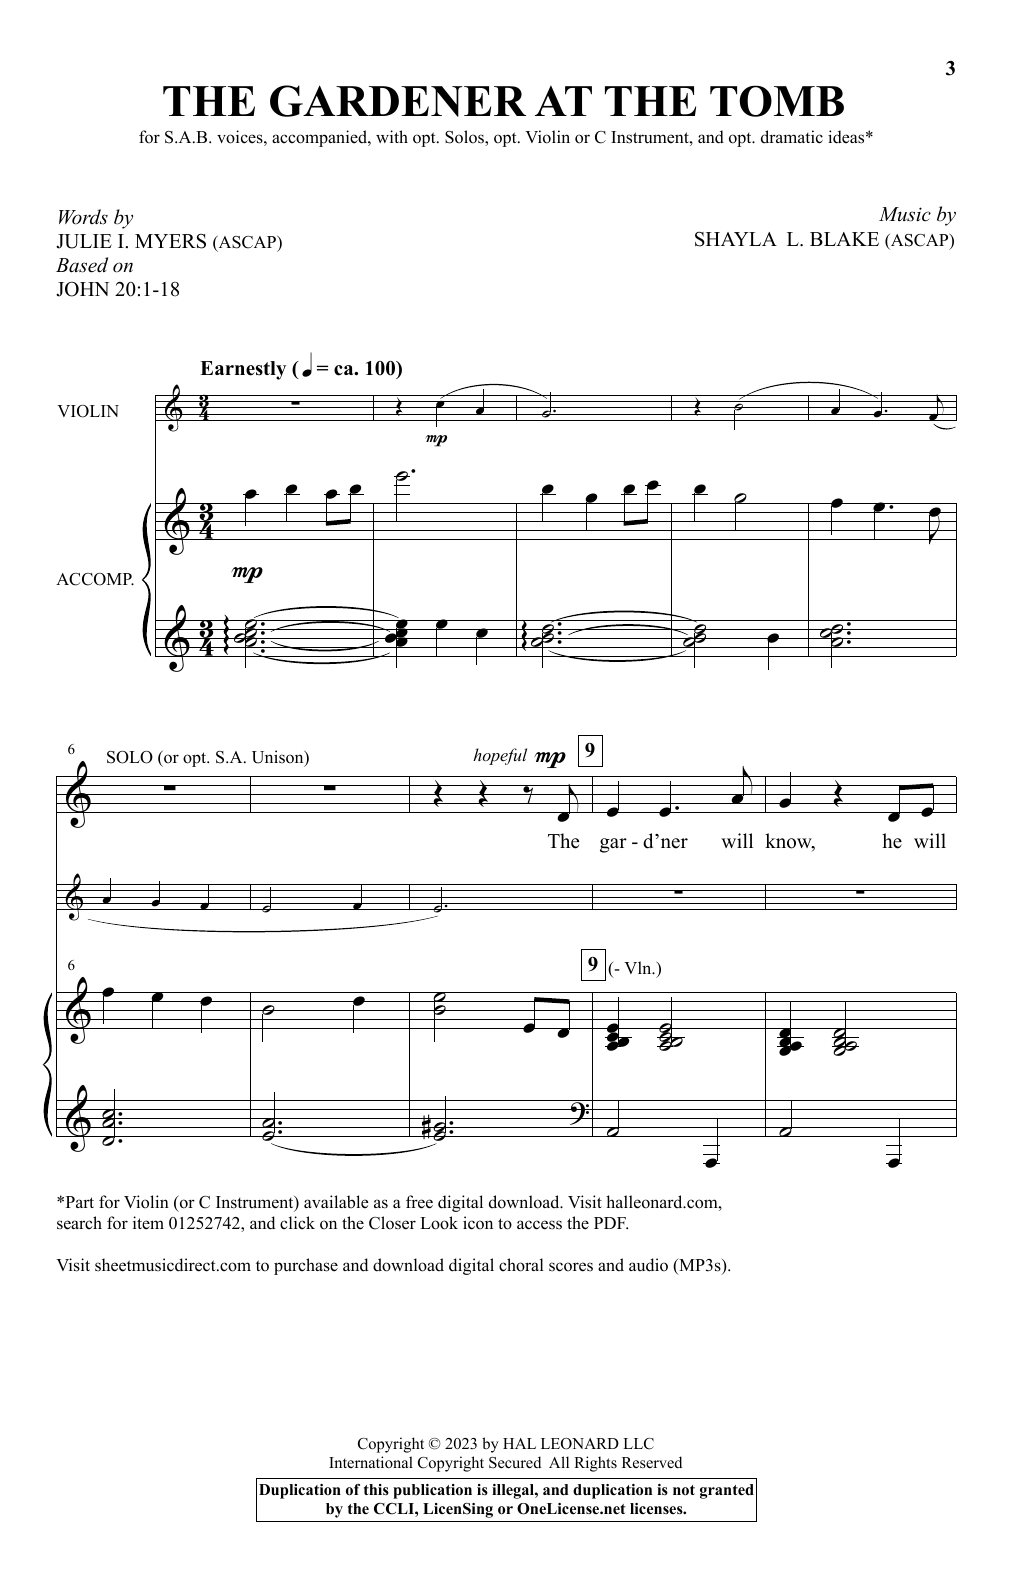 Shayla L. Blake The Gardener At The Tomb Sheet Music Notes & Chords for SAB Choir - Download or Print PDF